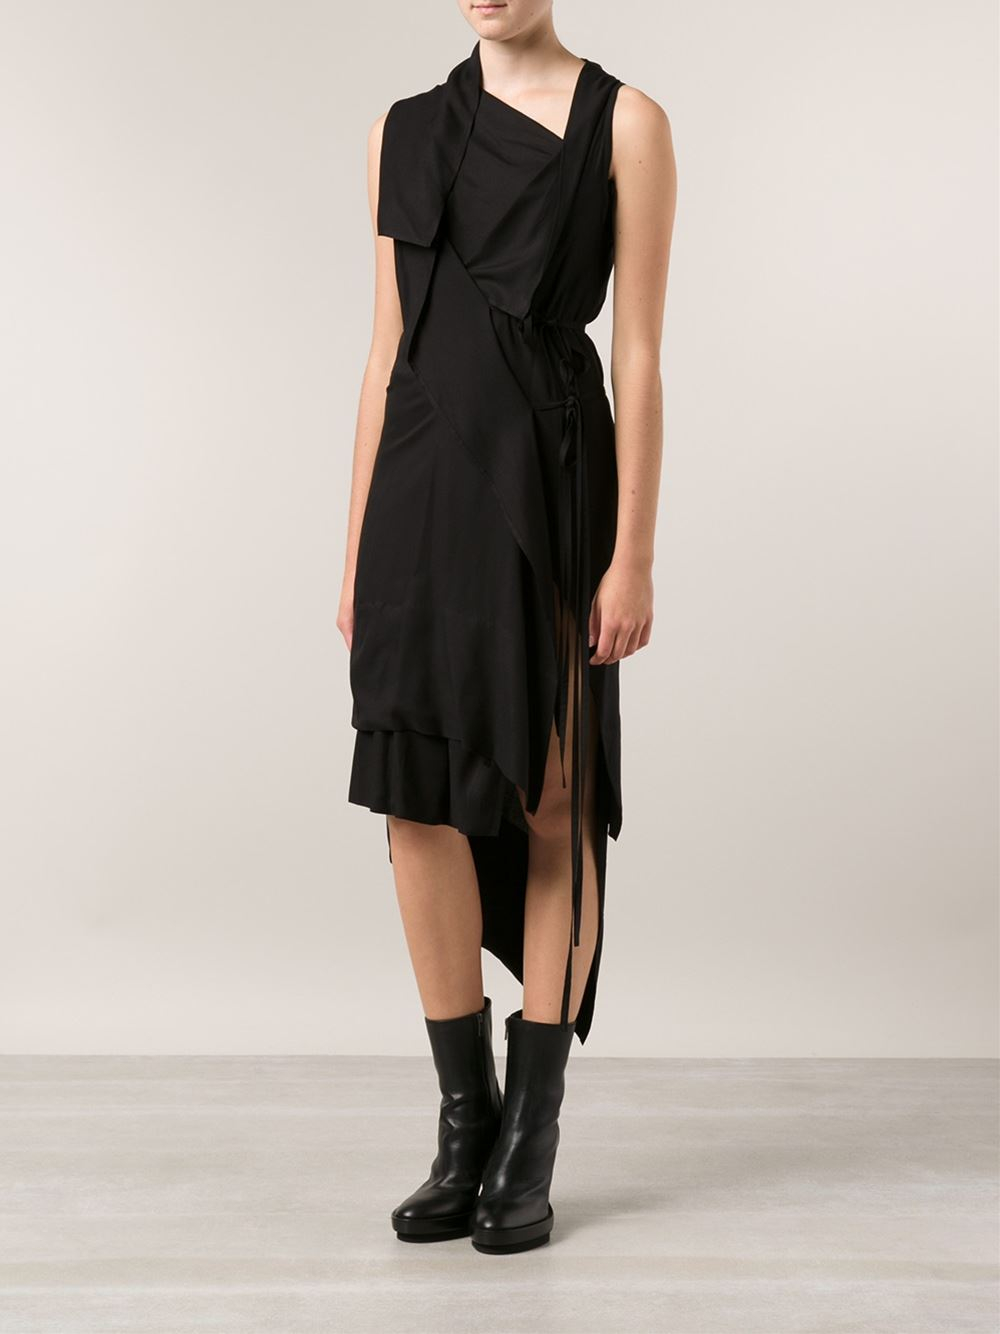 Ann demeulemeester Asymmetric Dress in Black | Lyst